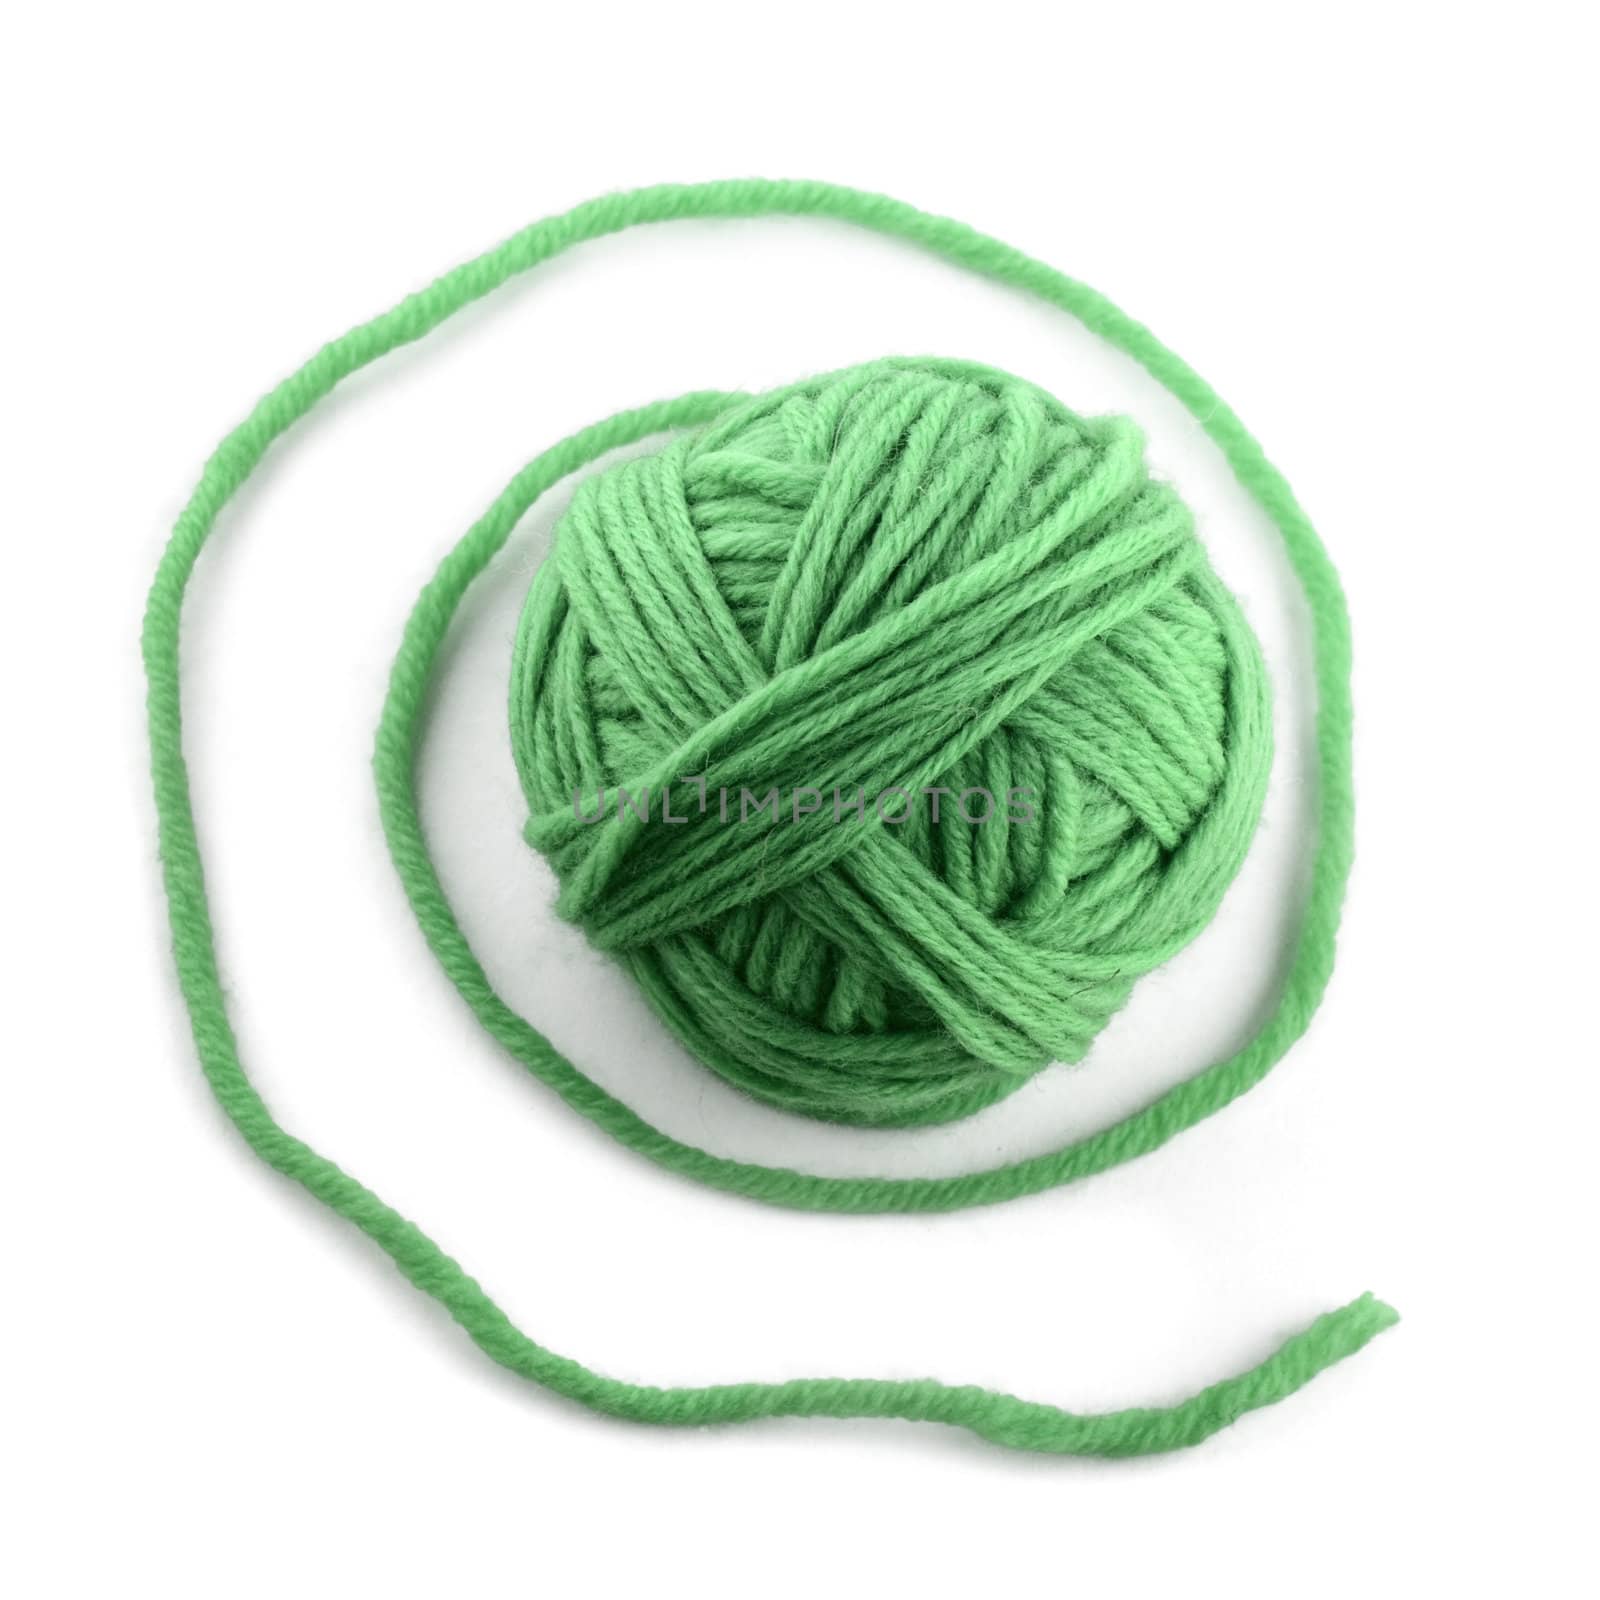 Green thread ball by vtorous